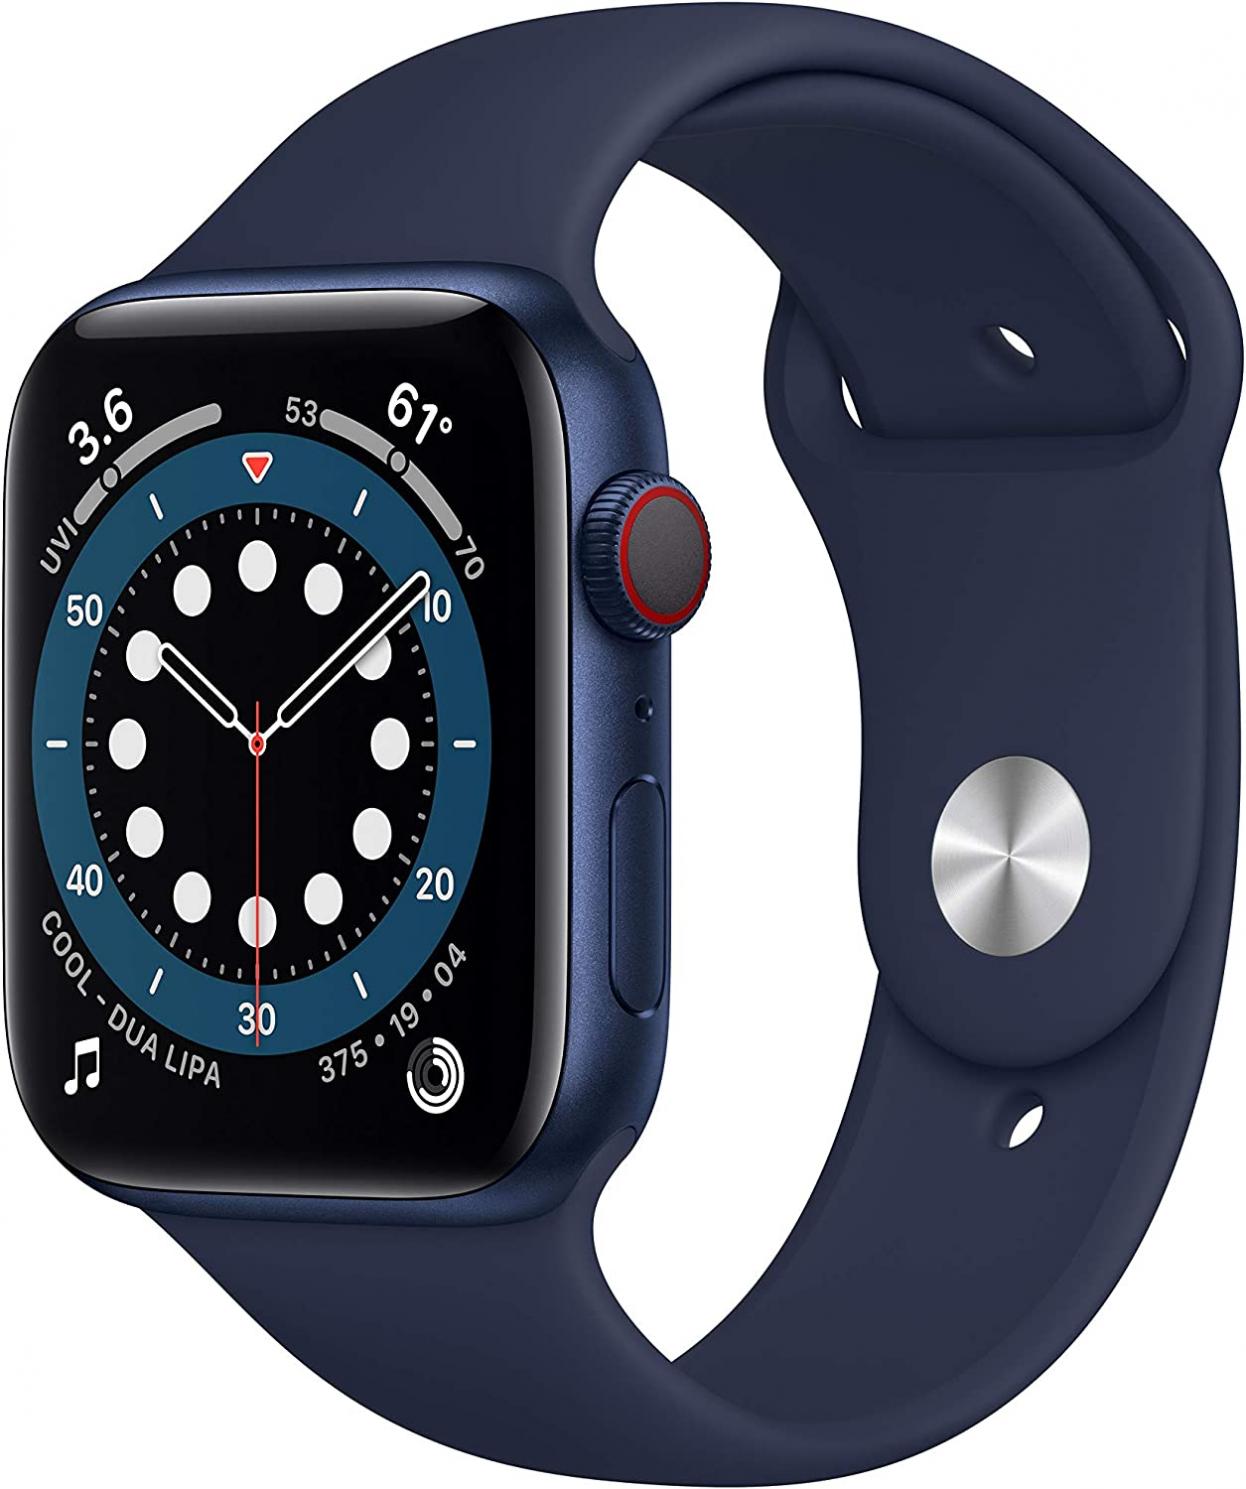 Apple Watch Series 6 (GPS + Cellular, 44mm) - Blue Aluminum Case with Deep Navy Sport Band